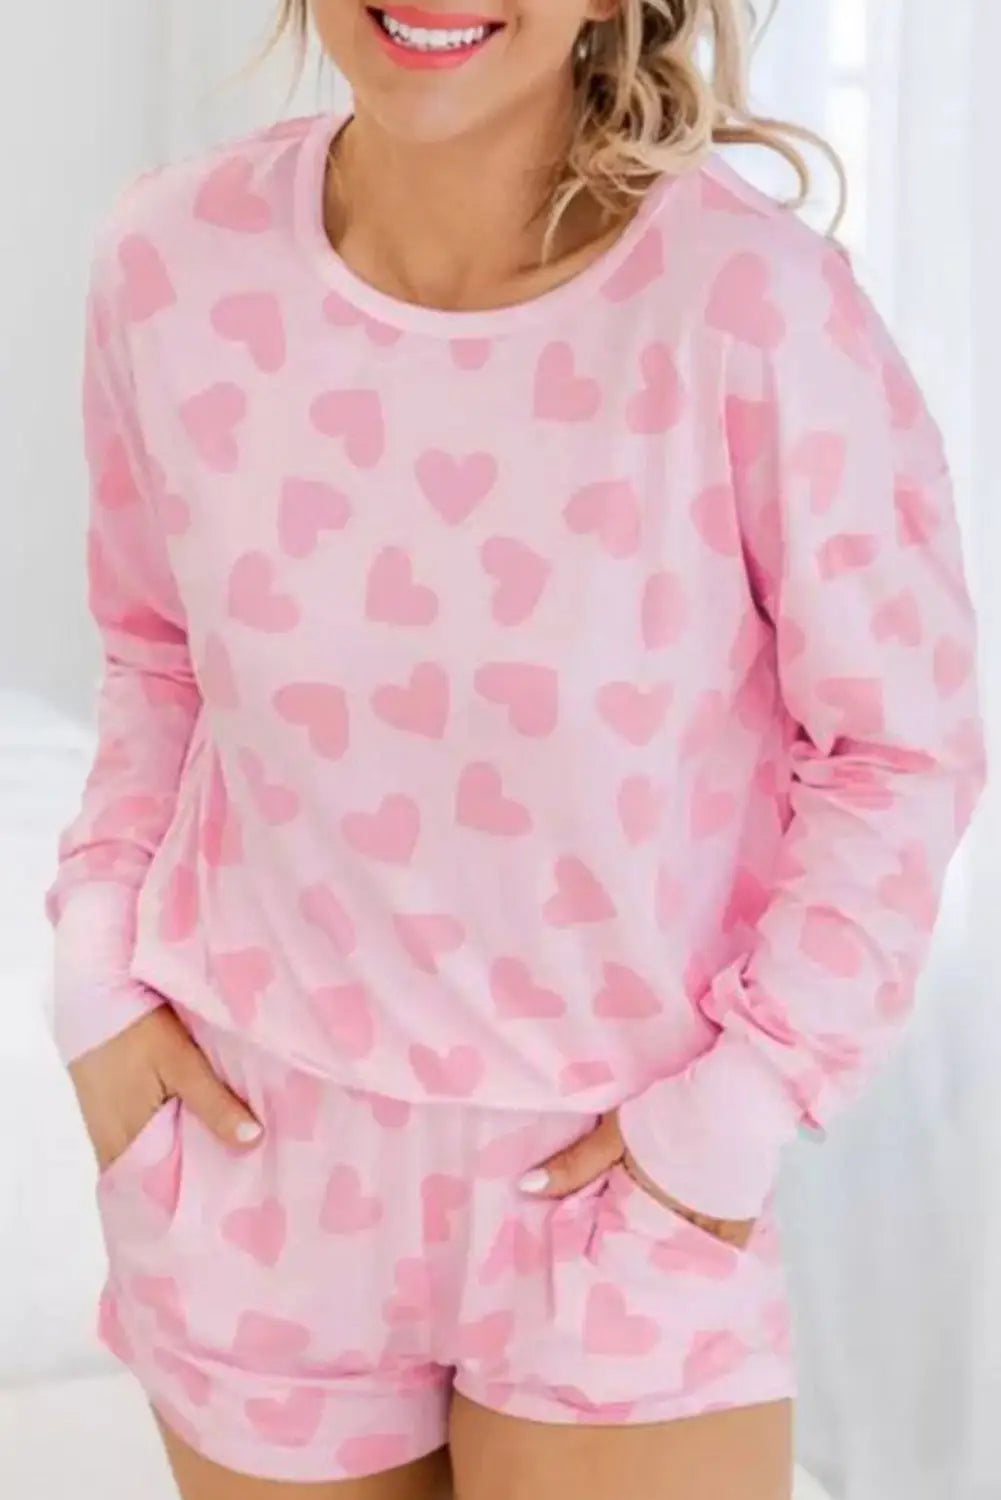 Pink valentine heart shape print long sleeve top shorts lounge set - pink1 / s / 95% polyester + 5% elastane